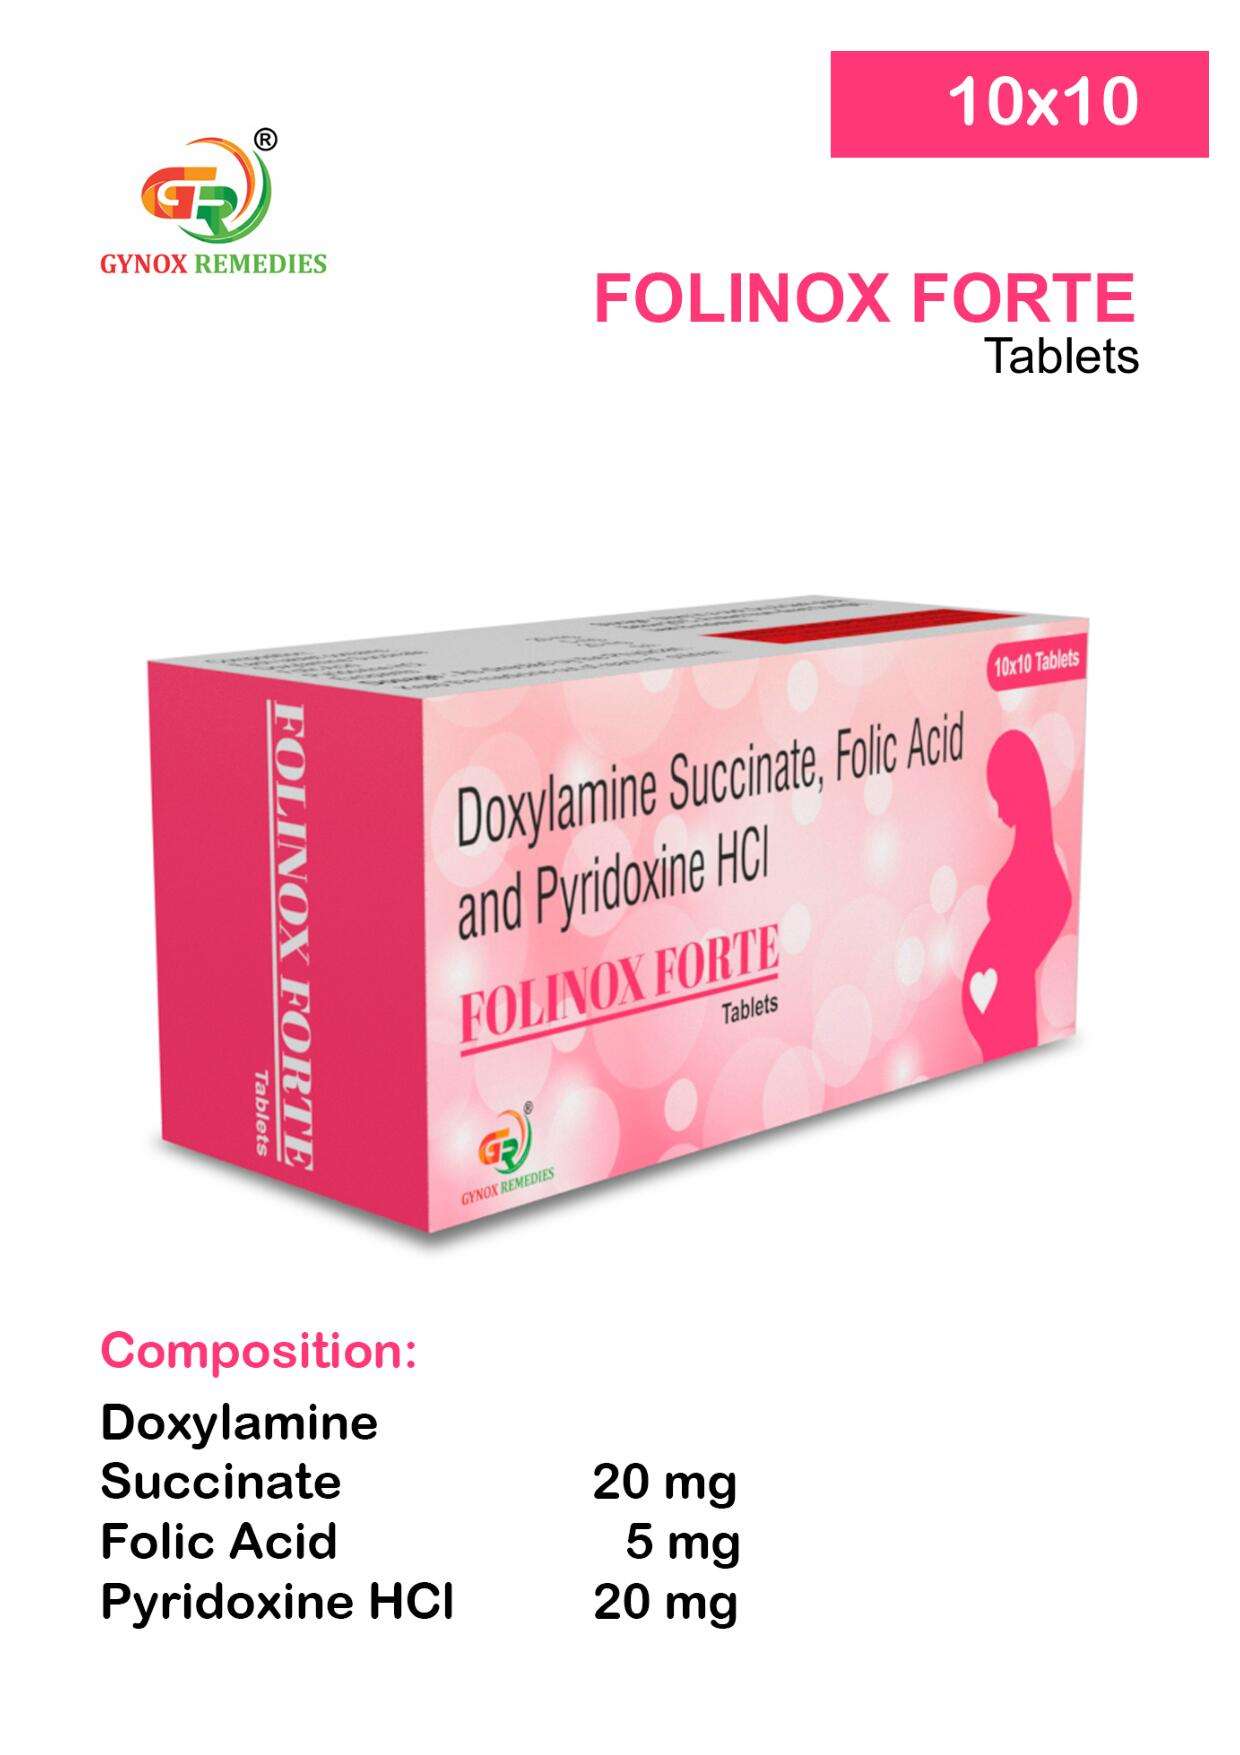 doxylamine succinate 20mg + folic acid 5mg + pyridoxine hcl 20mg